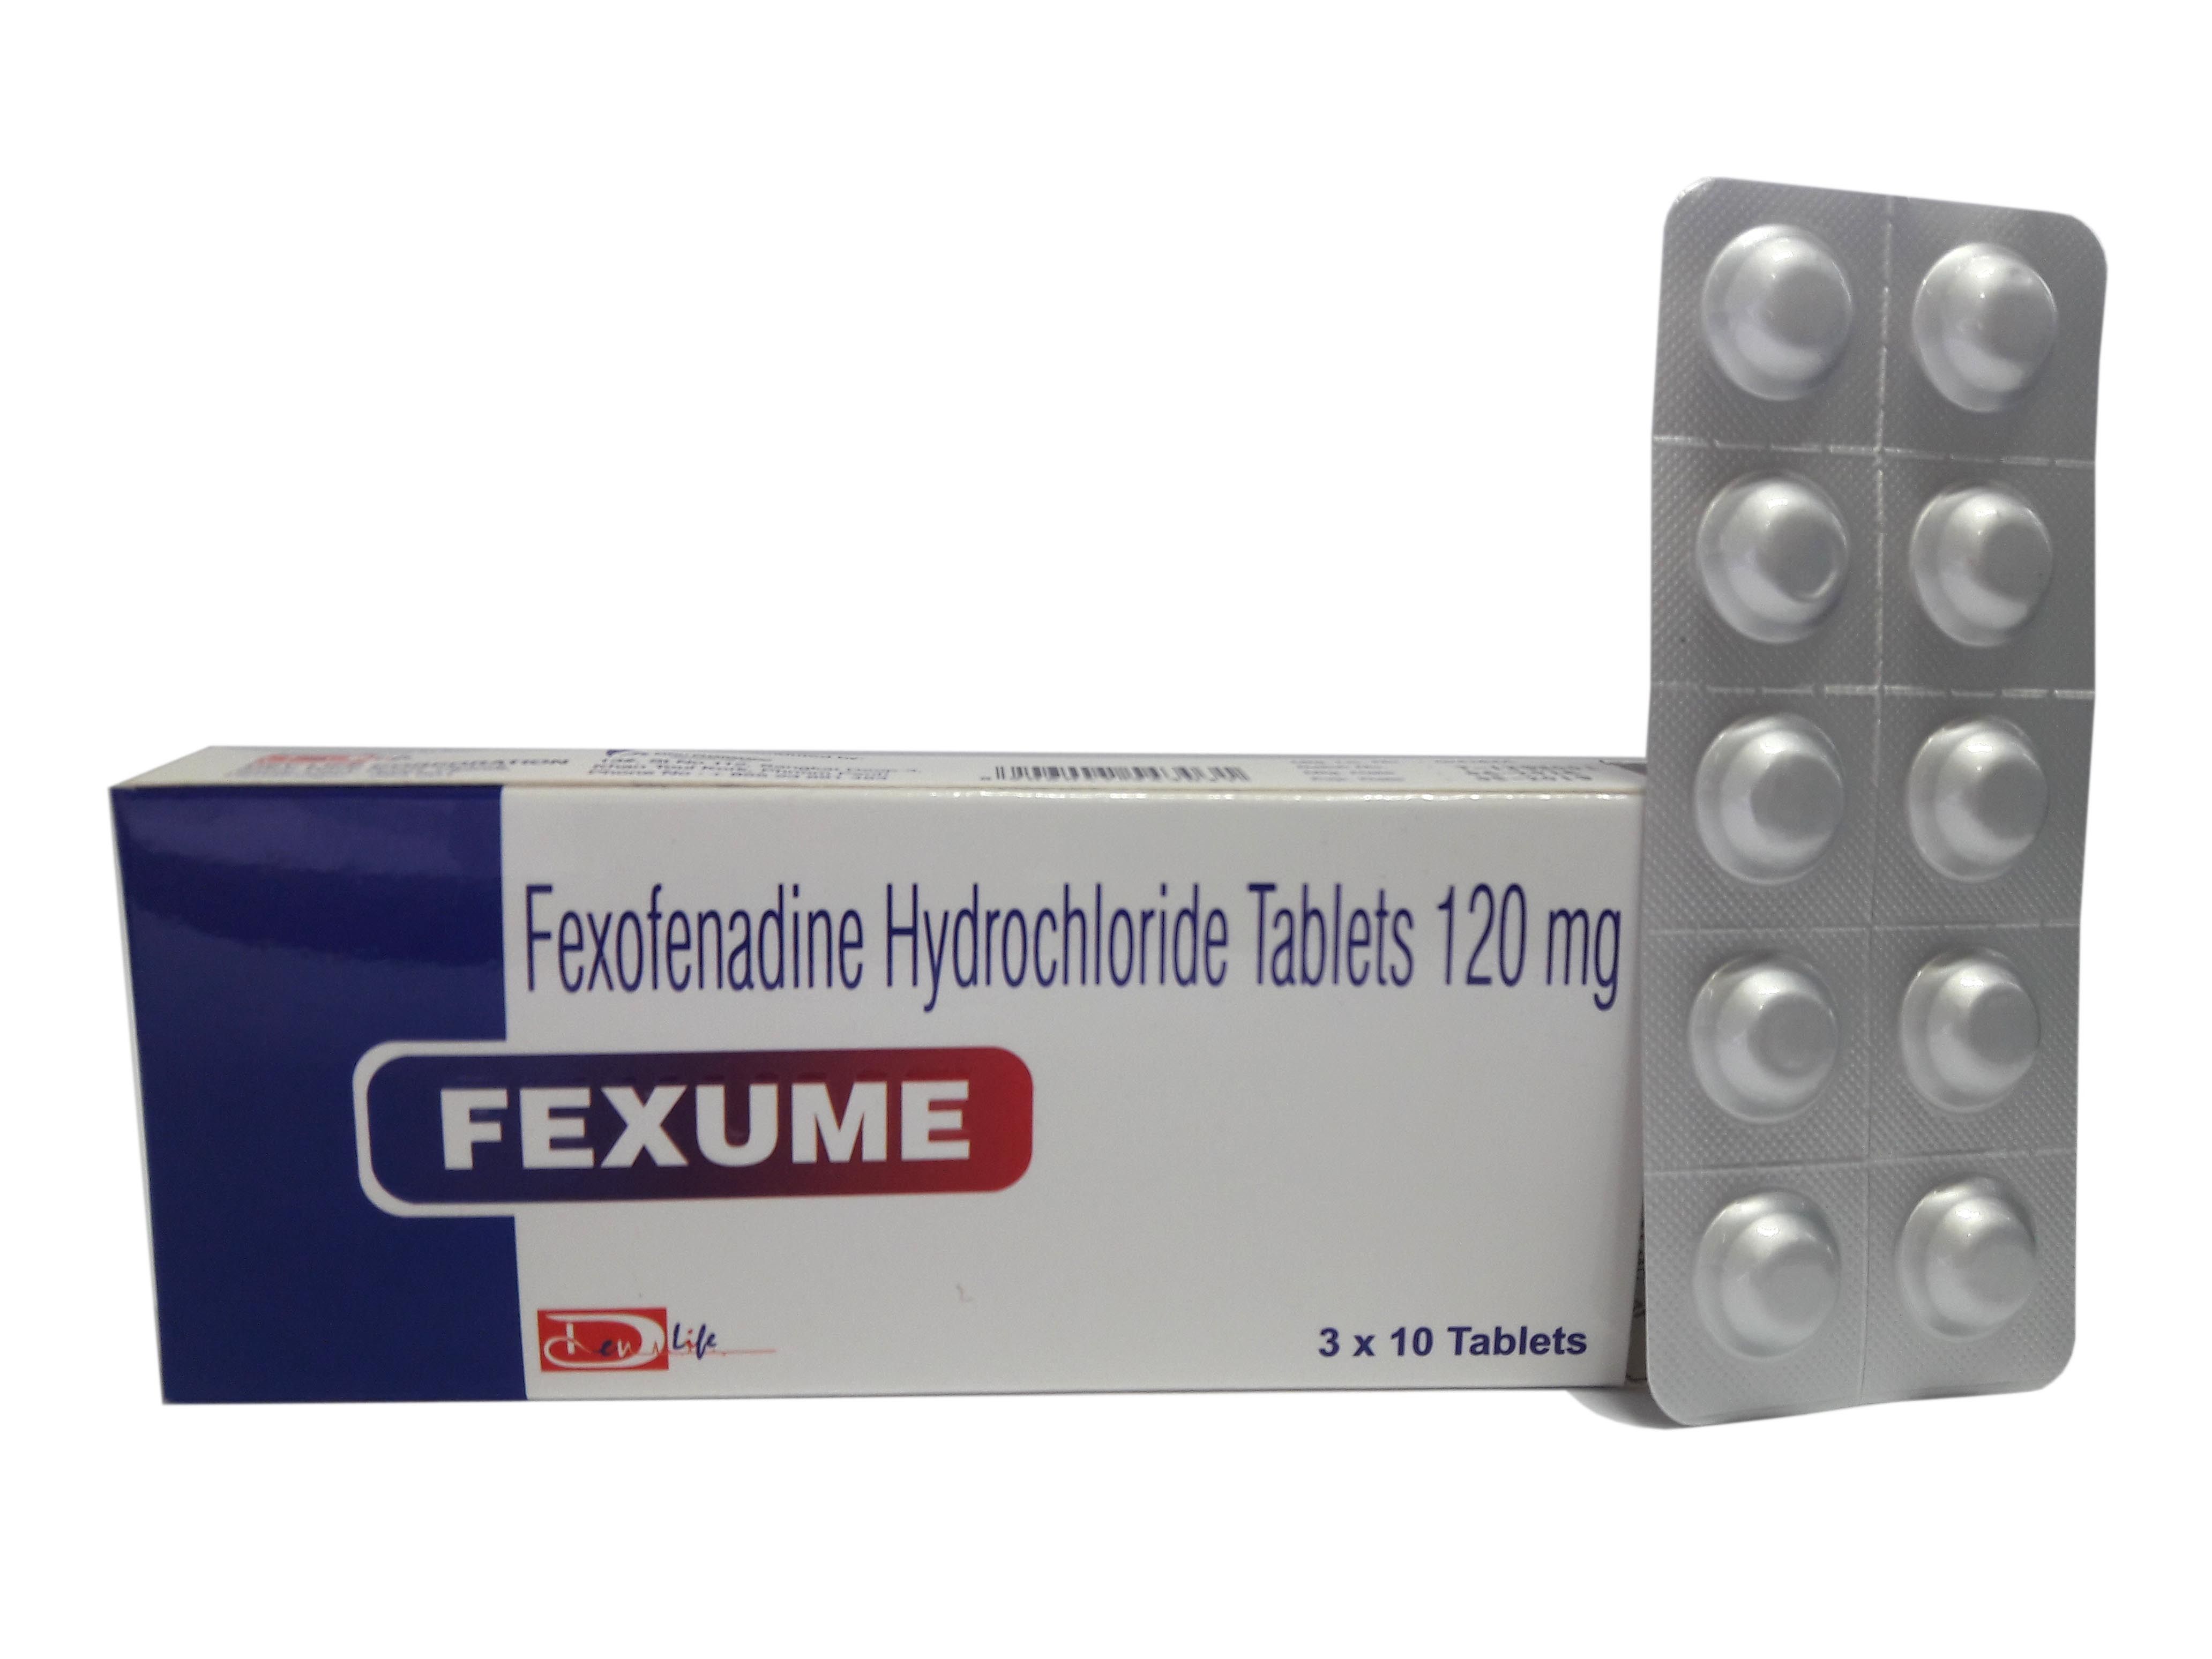 Fexofenadine HCL Tablets